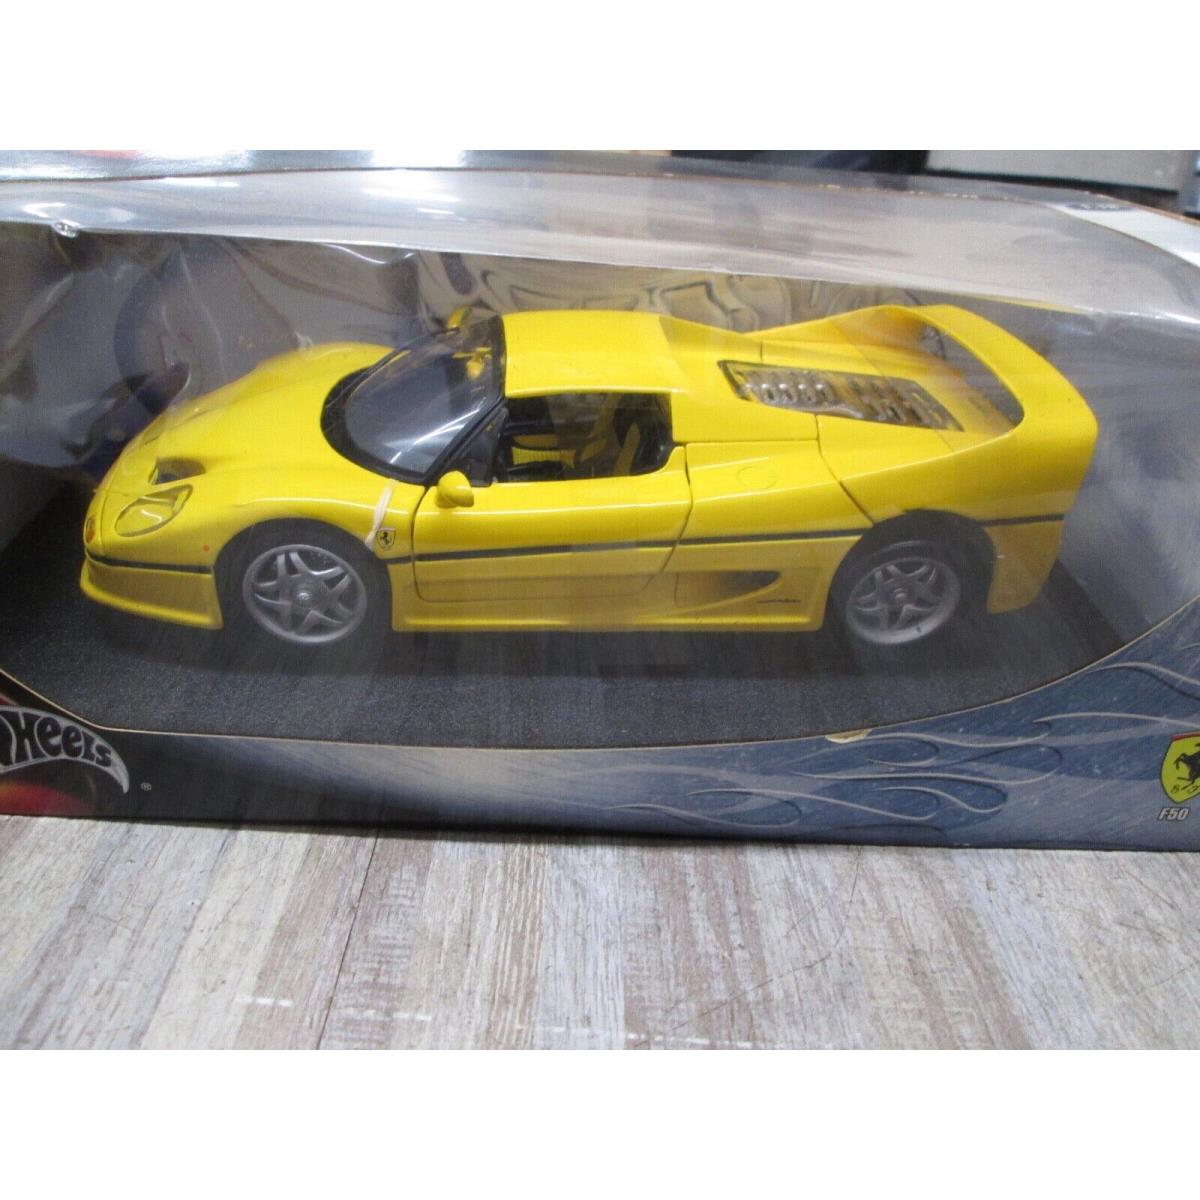 Hot Wheels 25728 Ferrari f50 1/18 2000 Mattel Yellow Collect Car